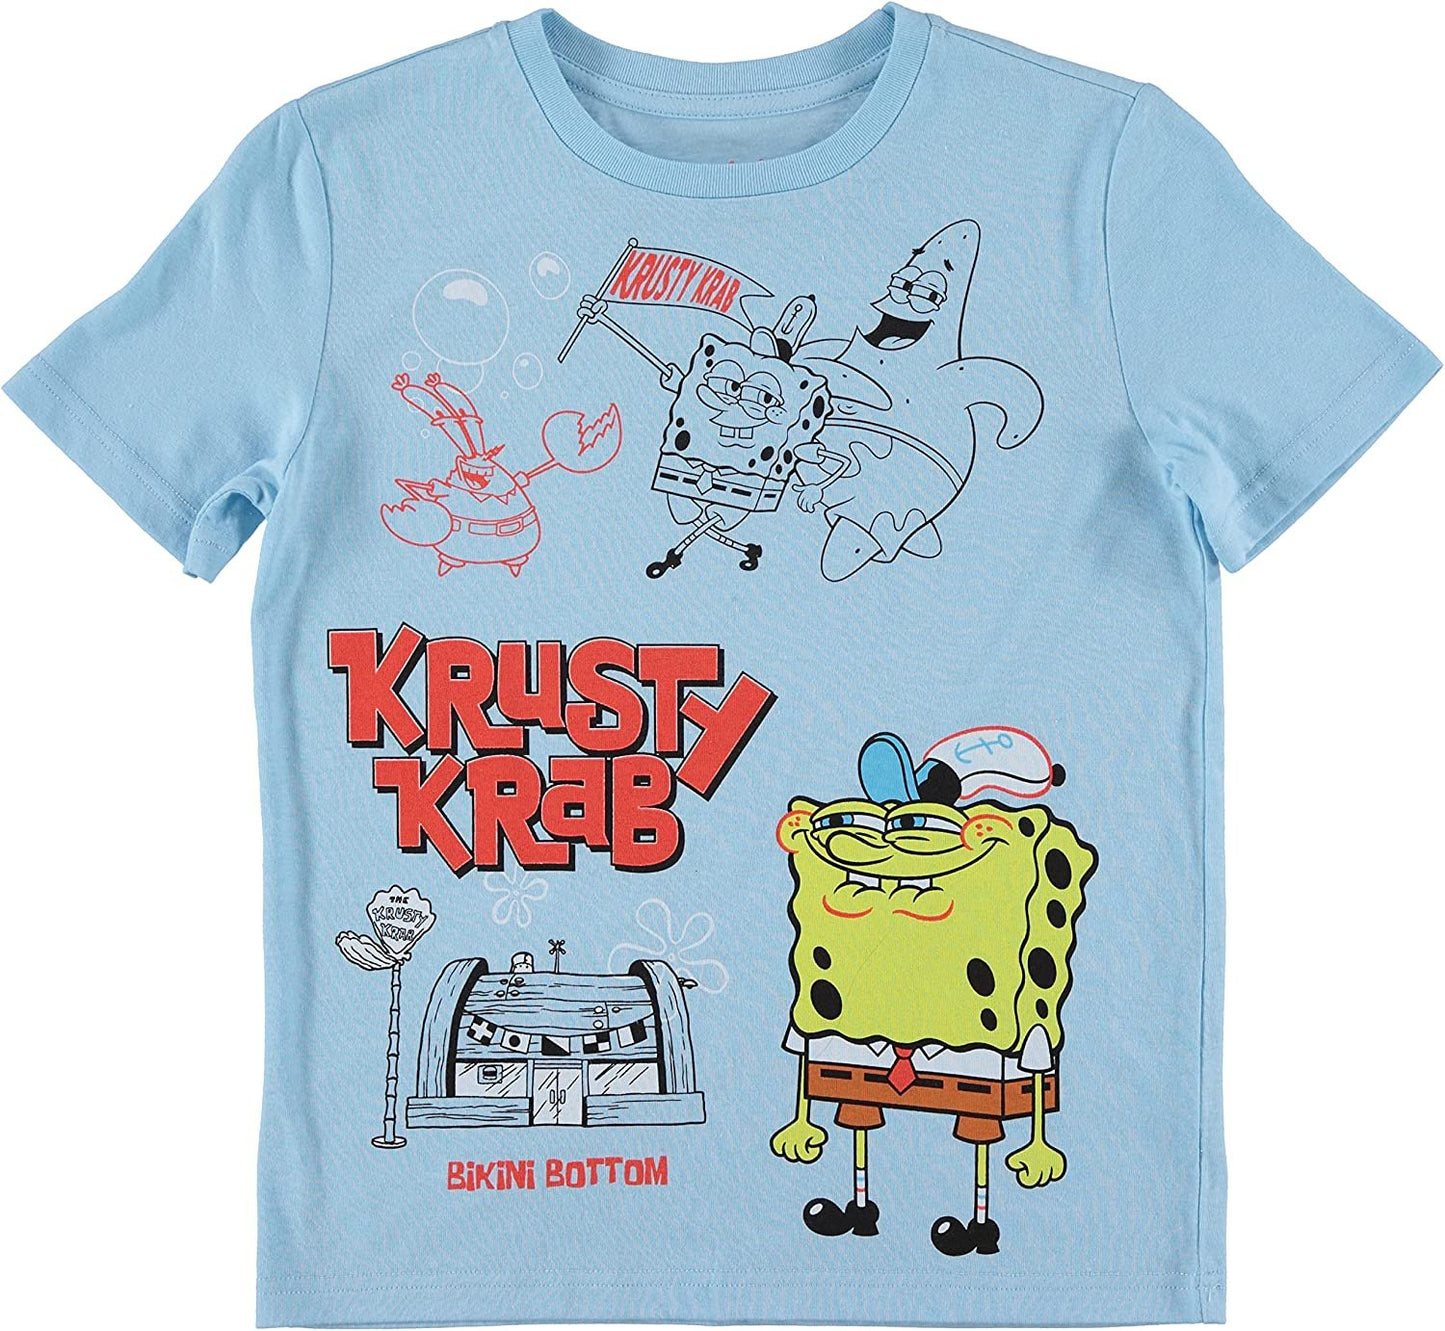 SpongeBob SquarePants Boy's T-Shirt and Shorts Bundle